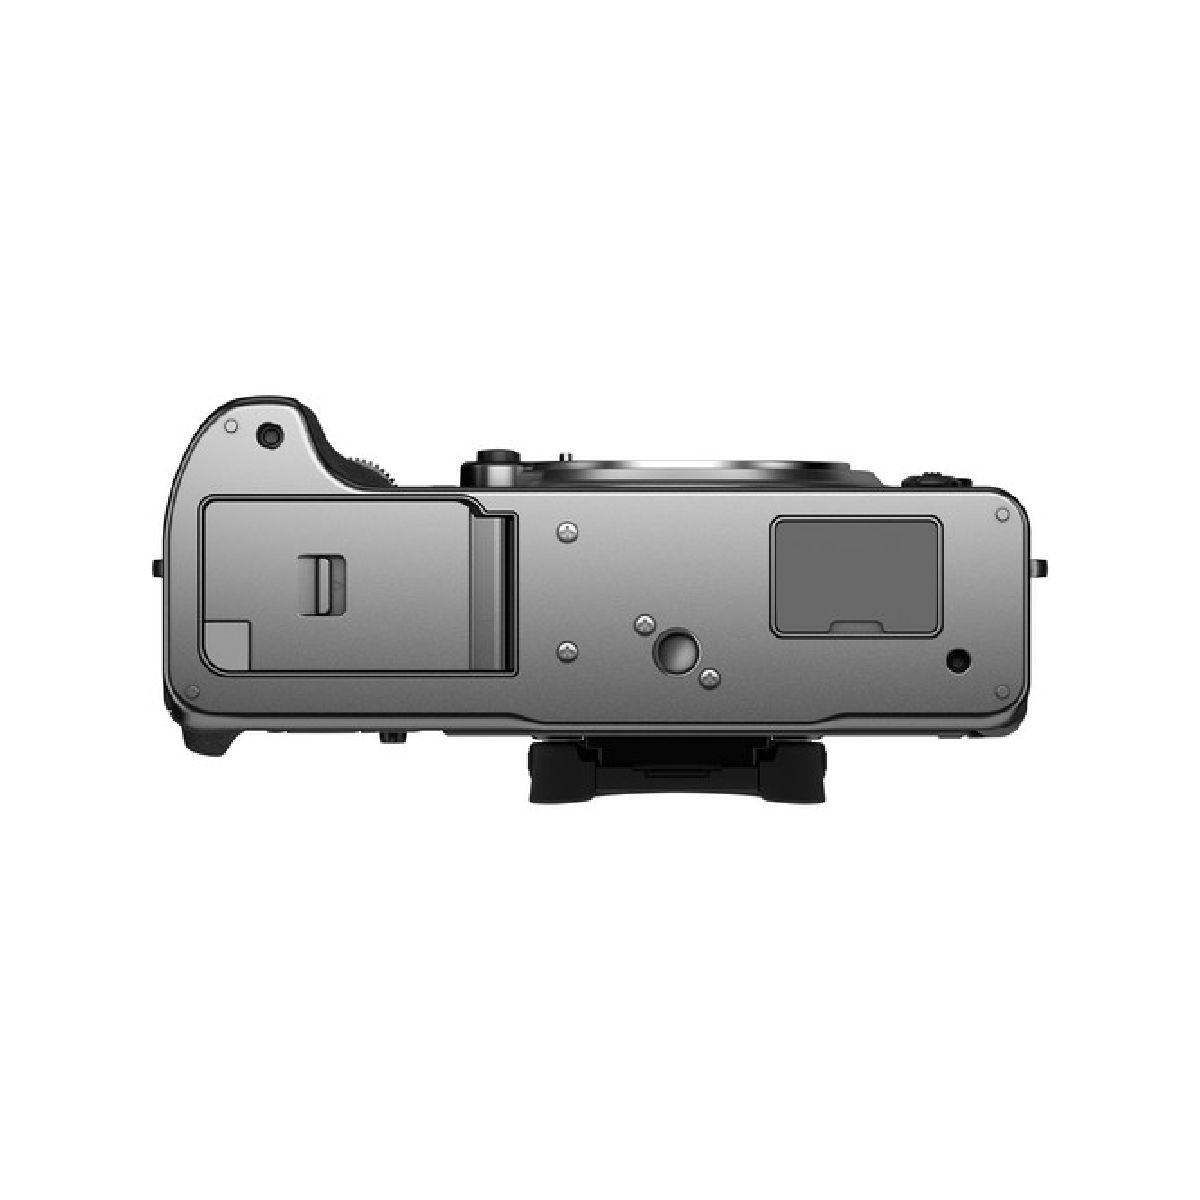 Fujifilm X-T4 26 MP Mirrorless Camera Body – Silver (4)